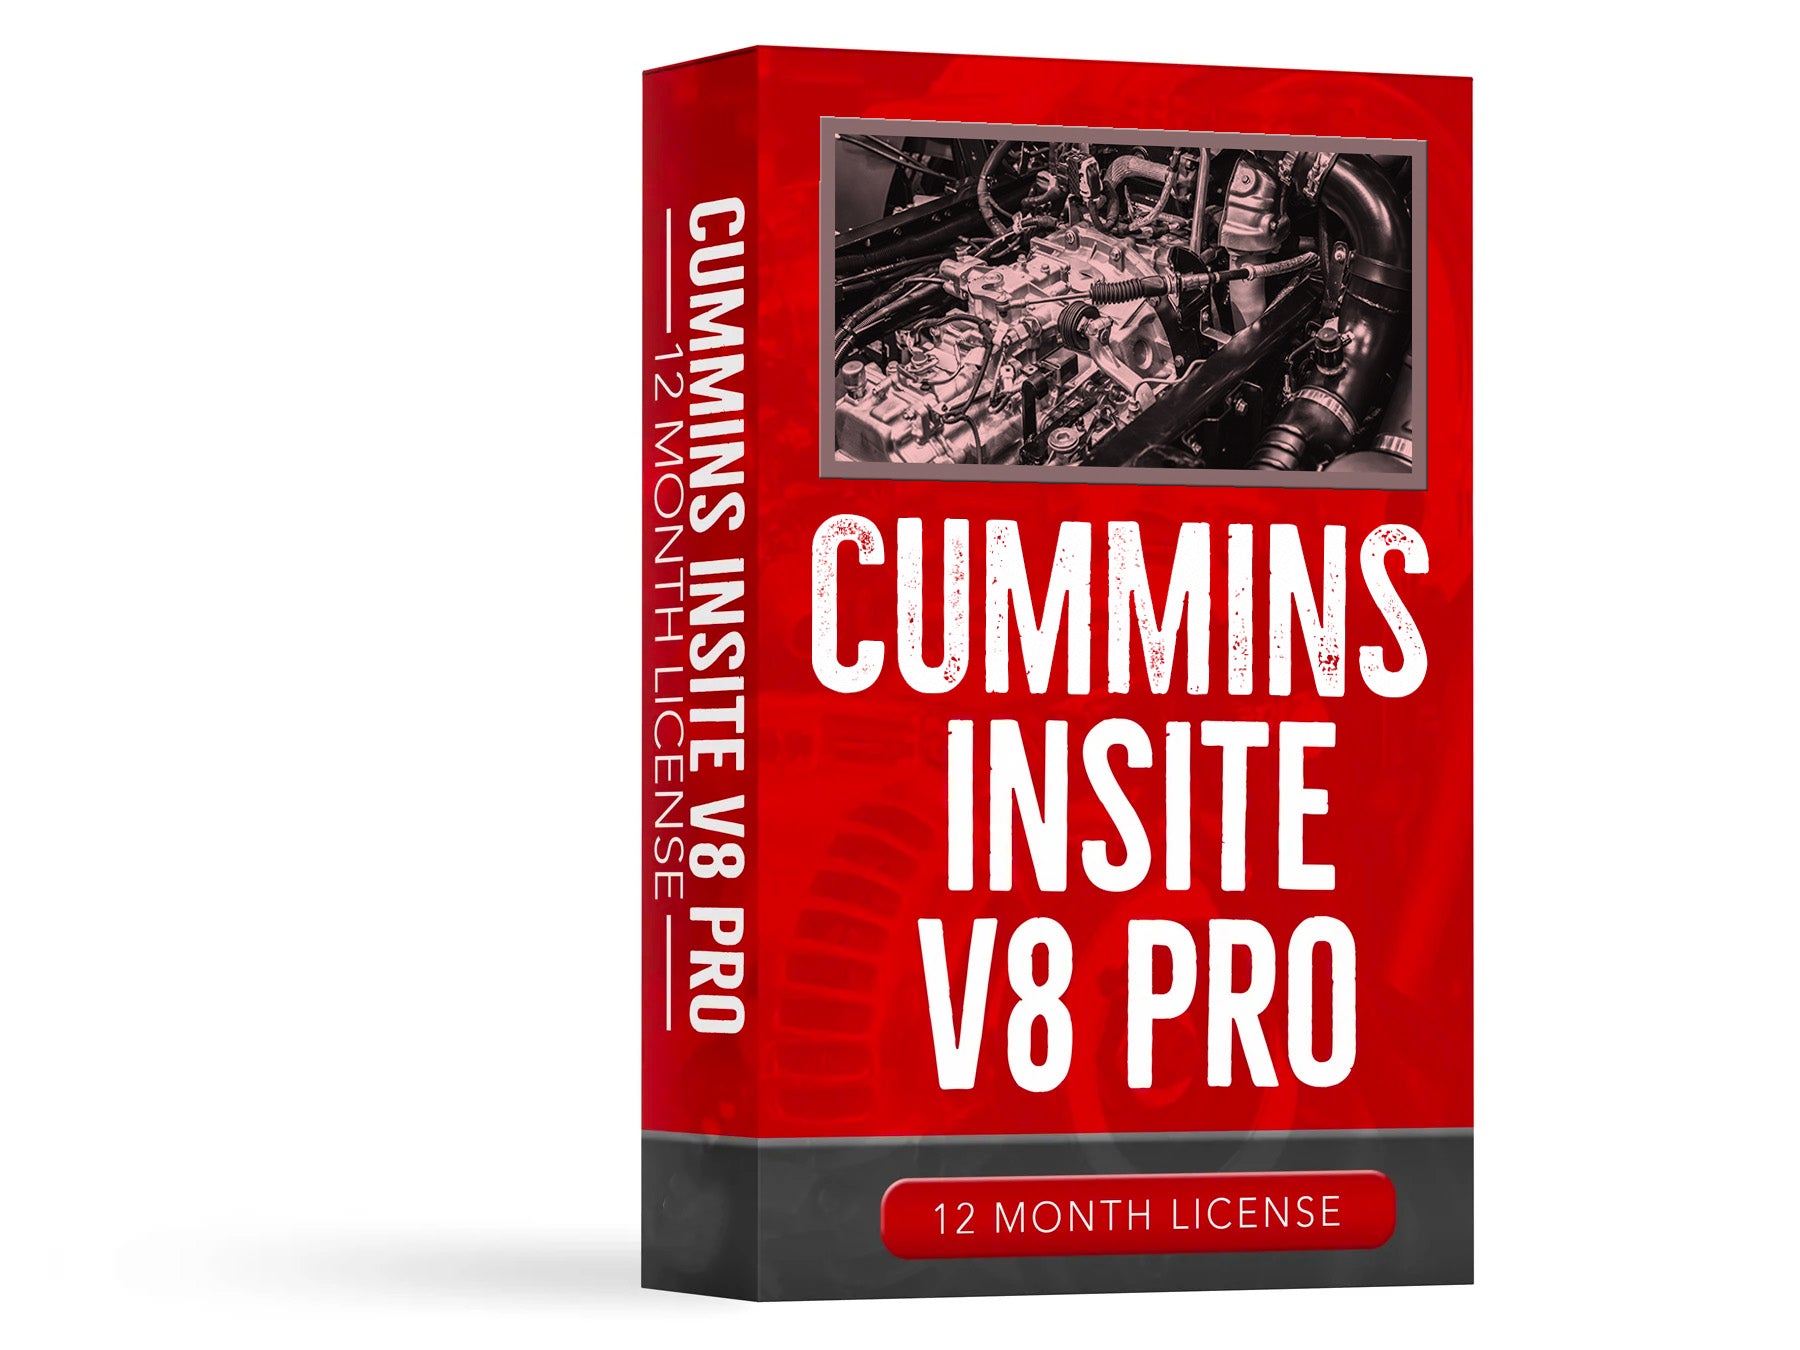 Cummins Insite v8 Pro - 12 Month License